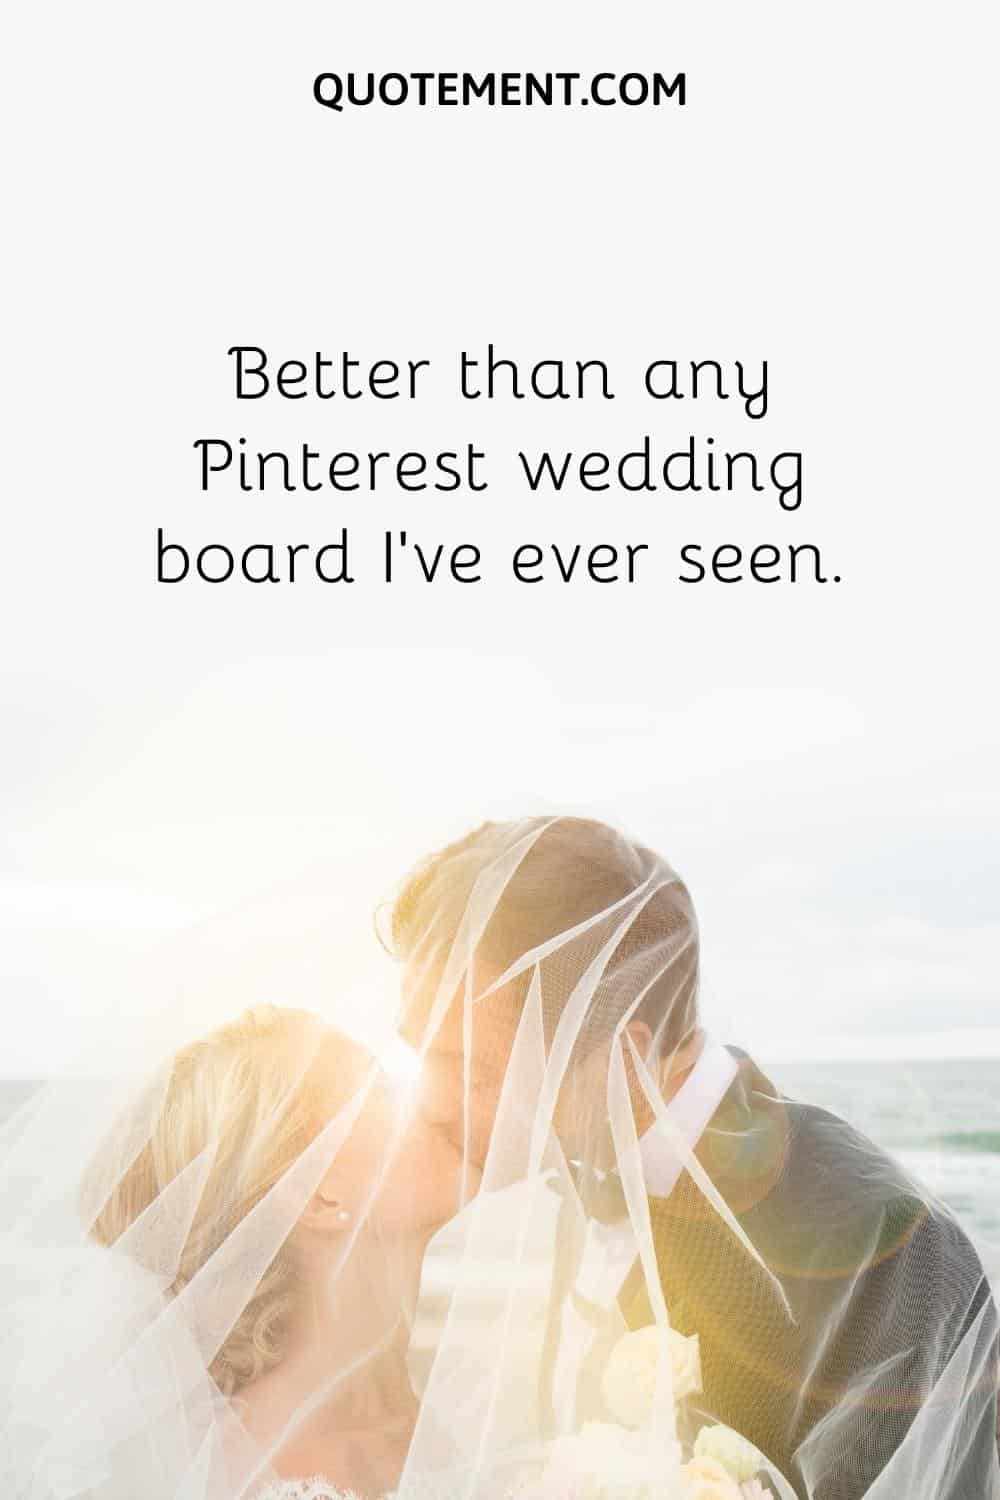 Better than any Pinterest wedding board I've ever seen.